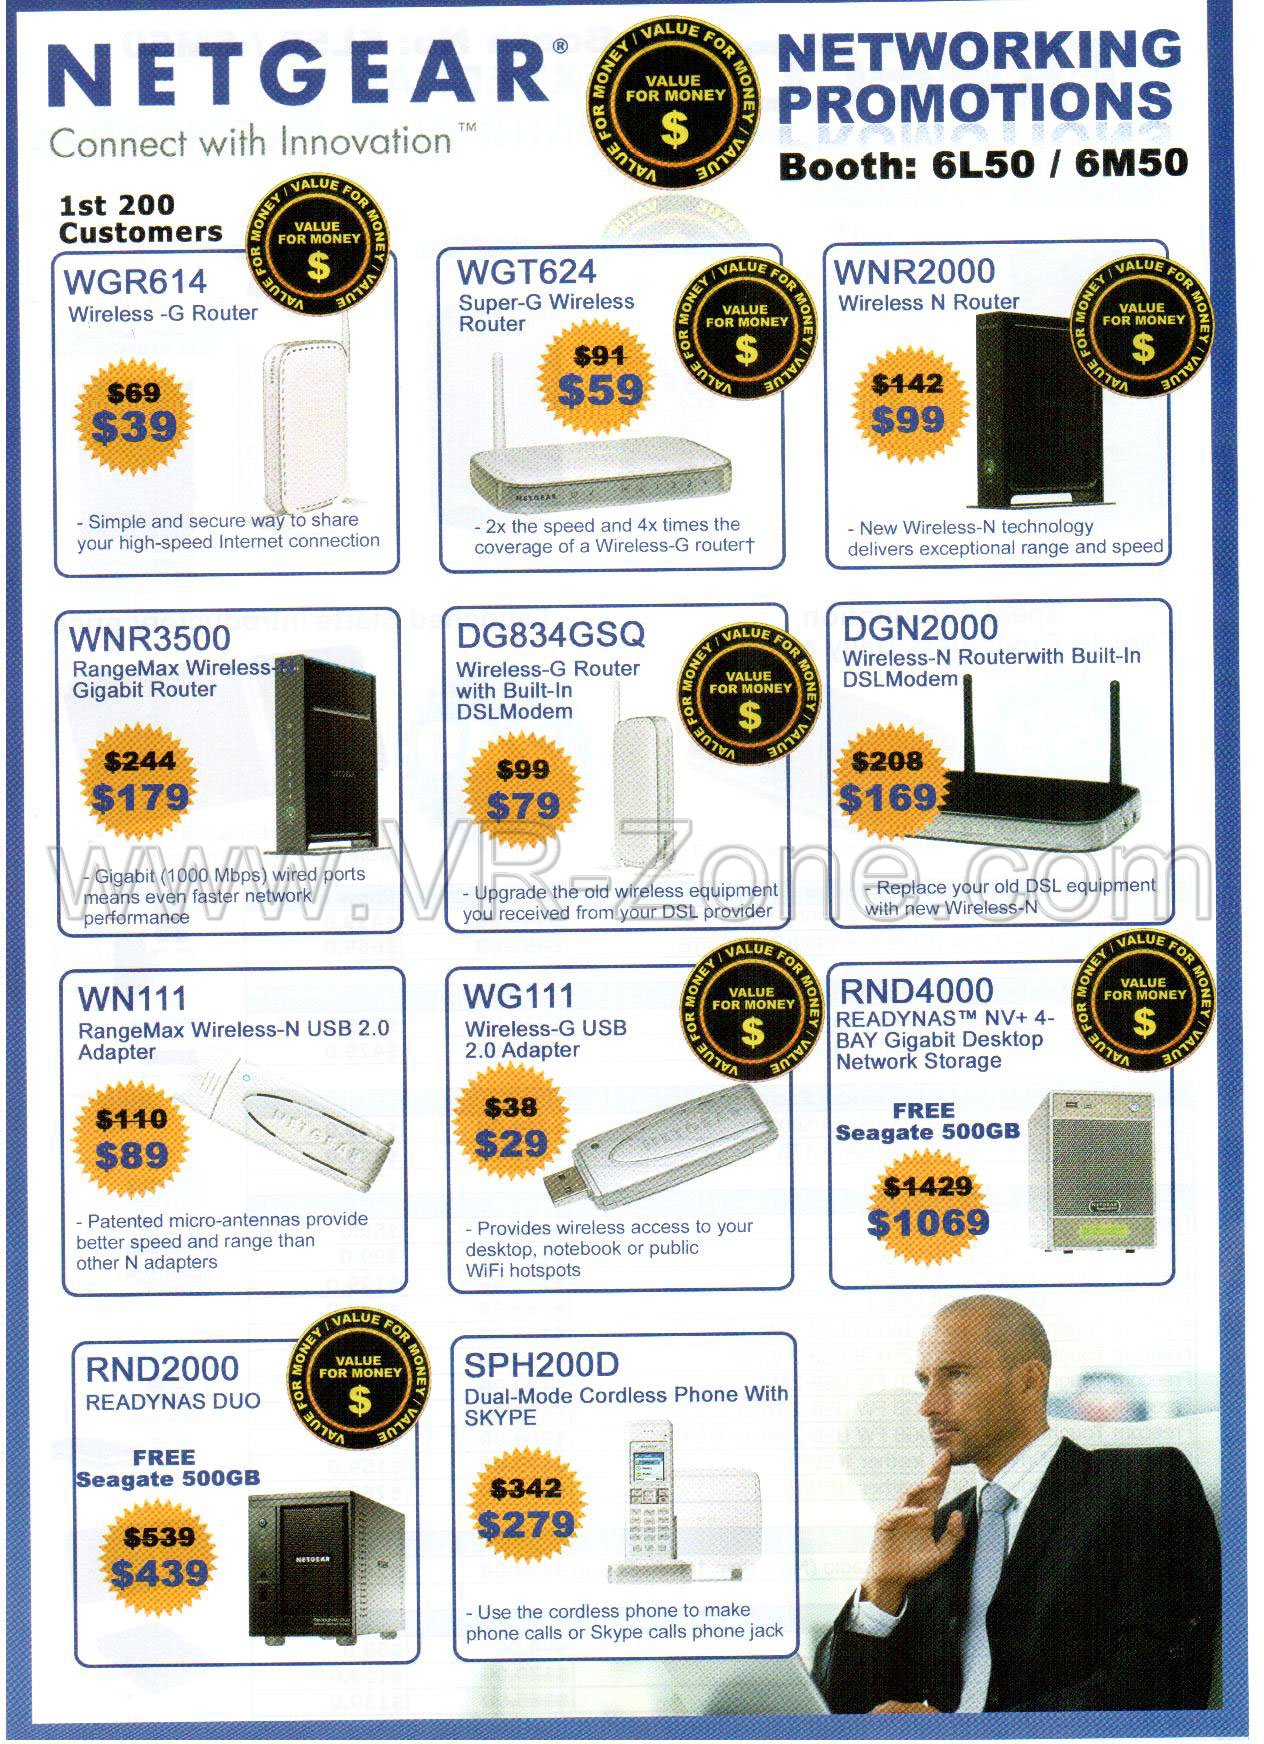 Sitex 2008 price list image brochure of Netgear